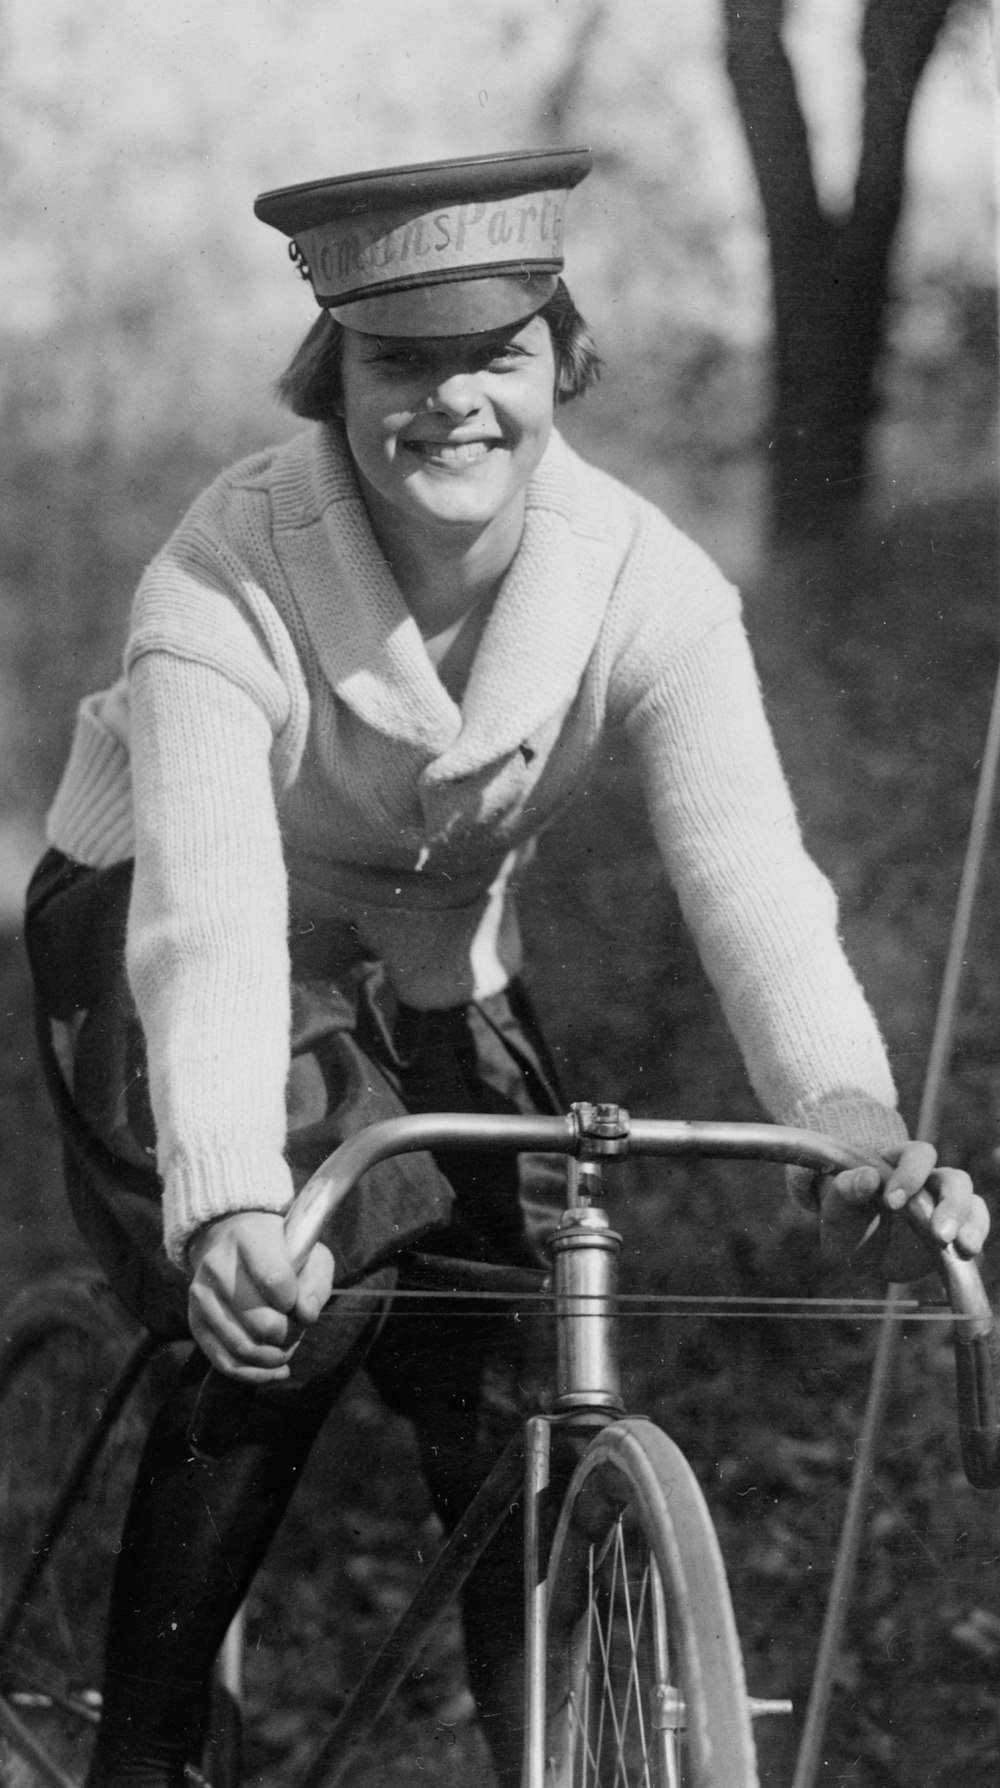 Julia Obear on bike